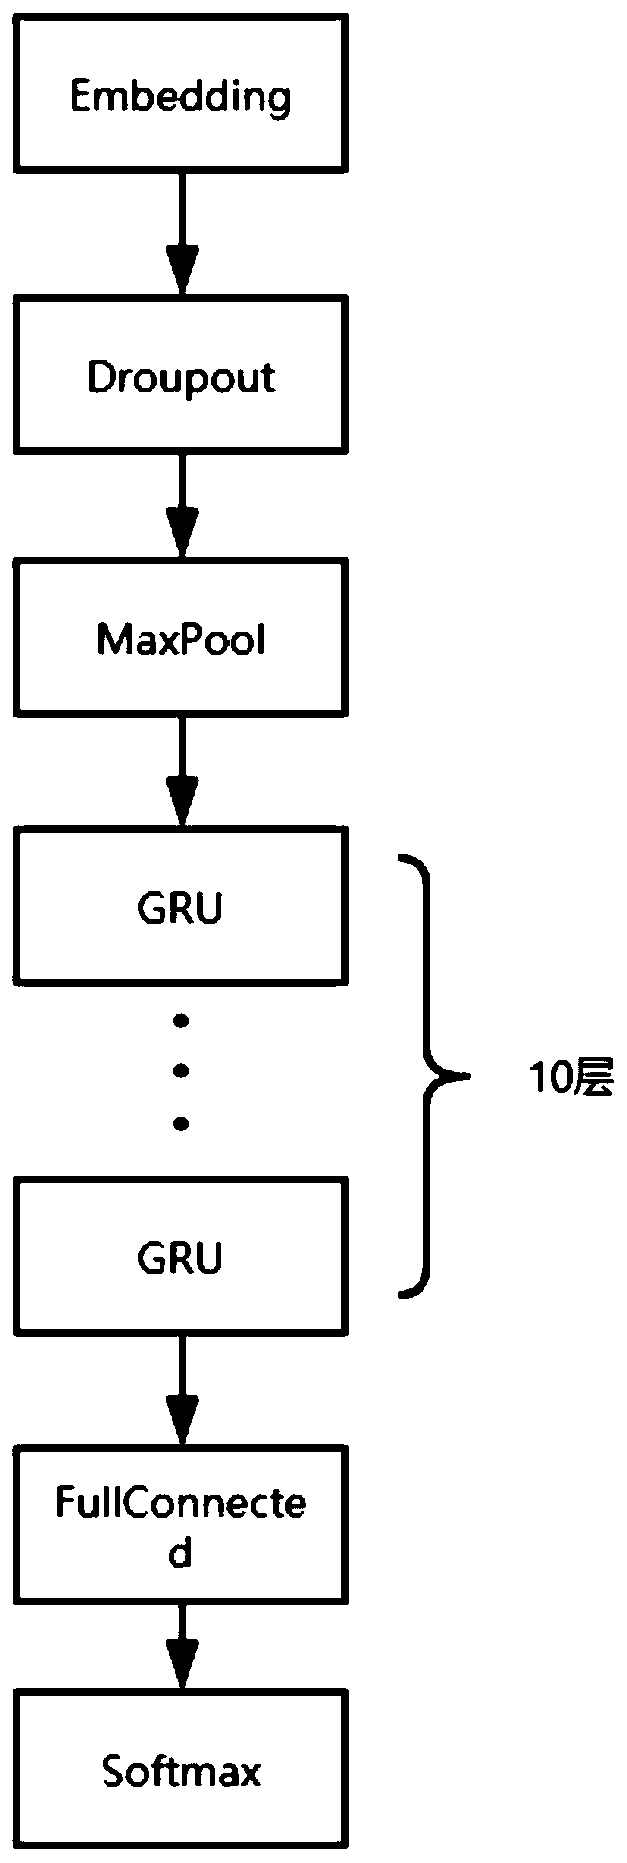 News website general crawler design method based on GRU neural network